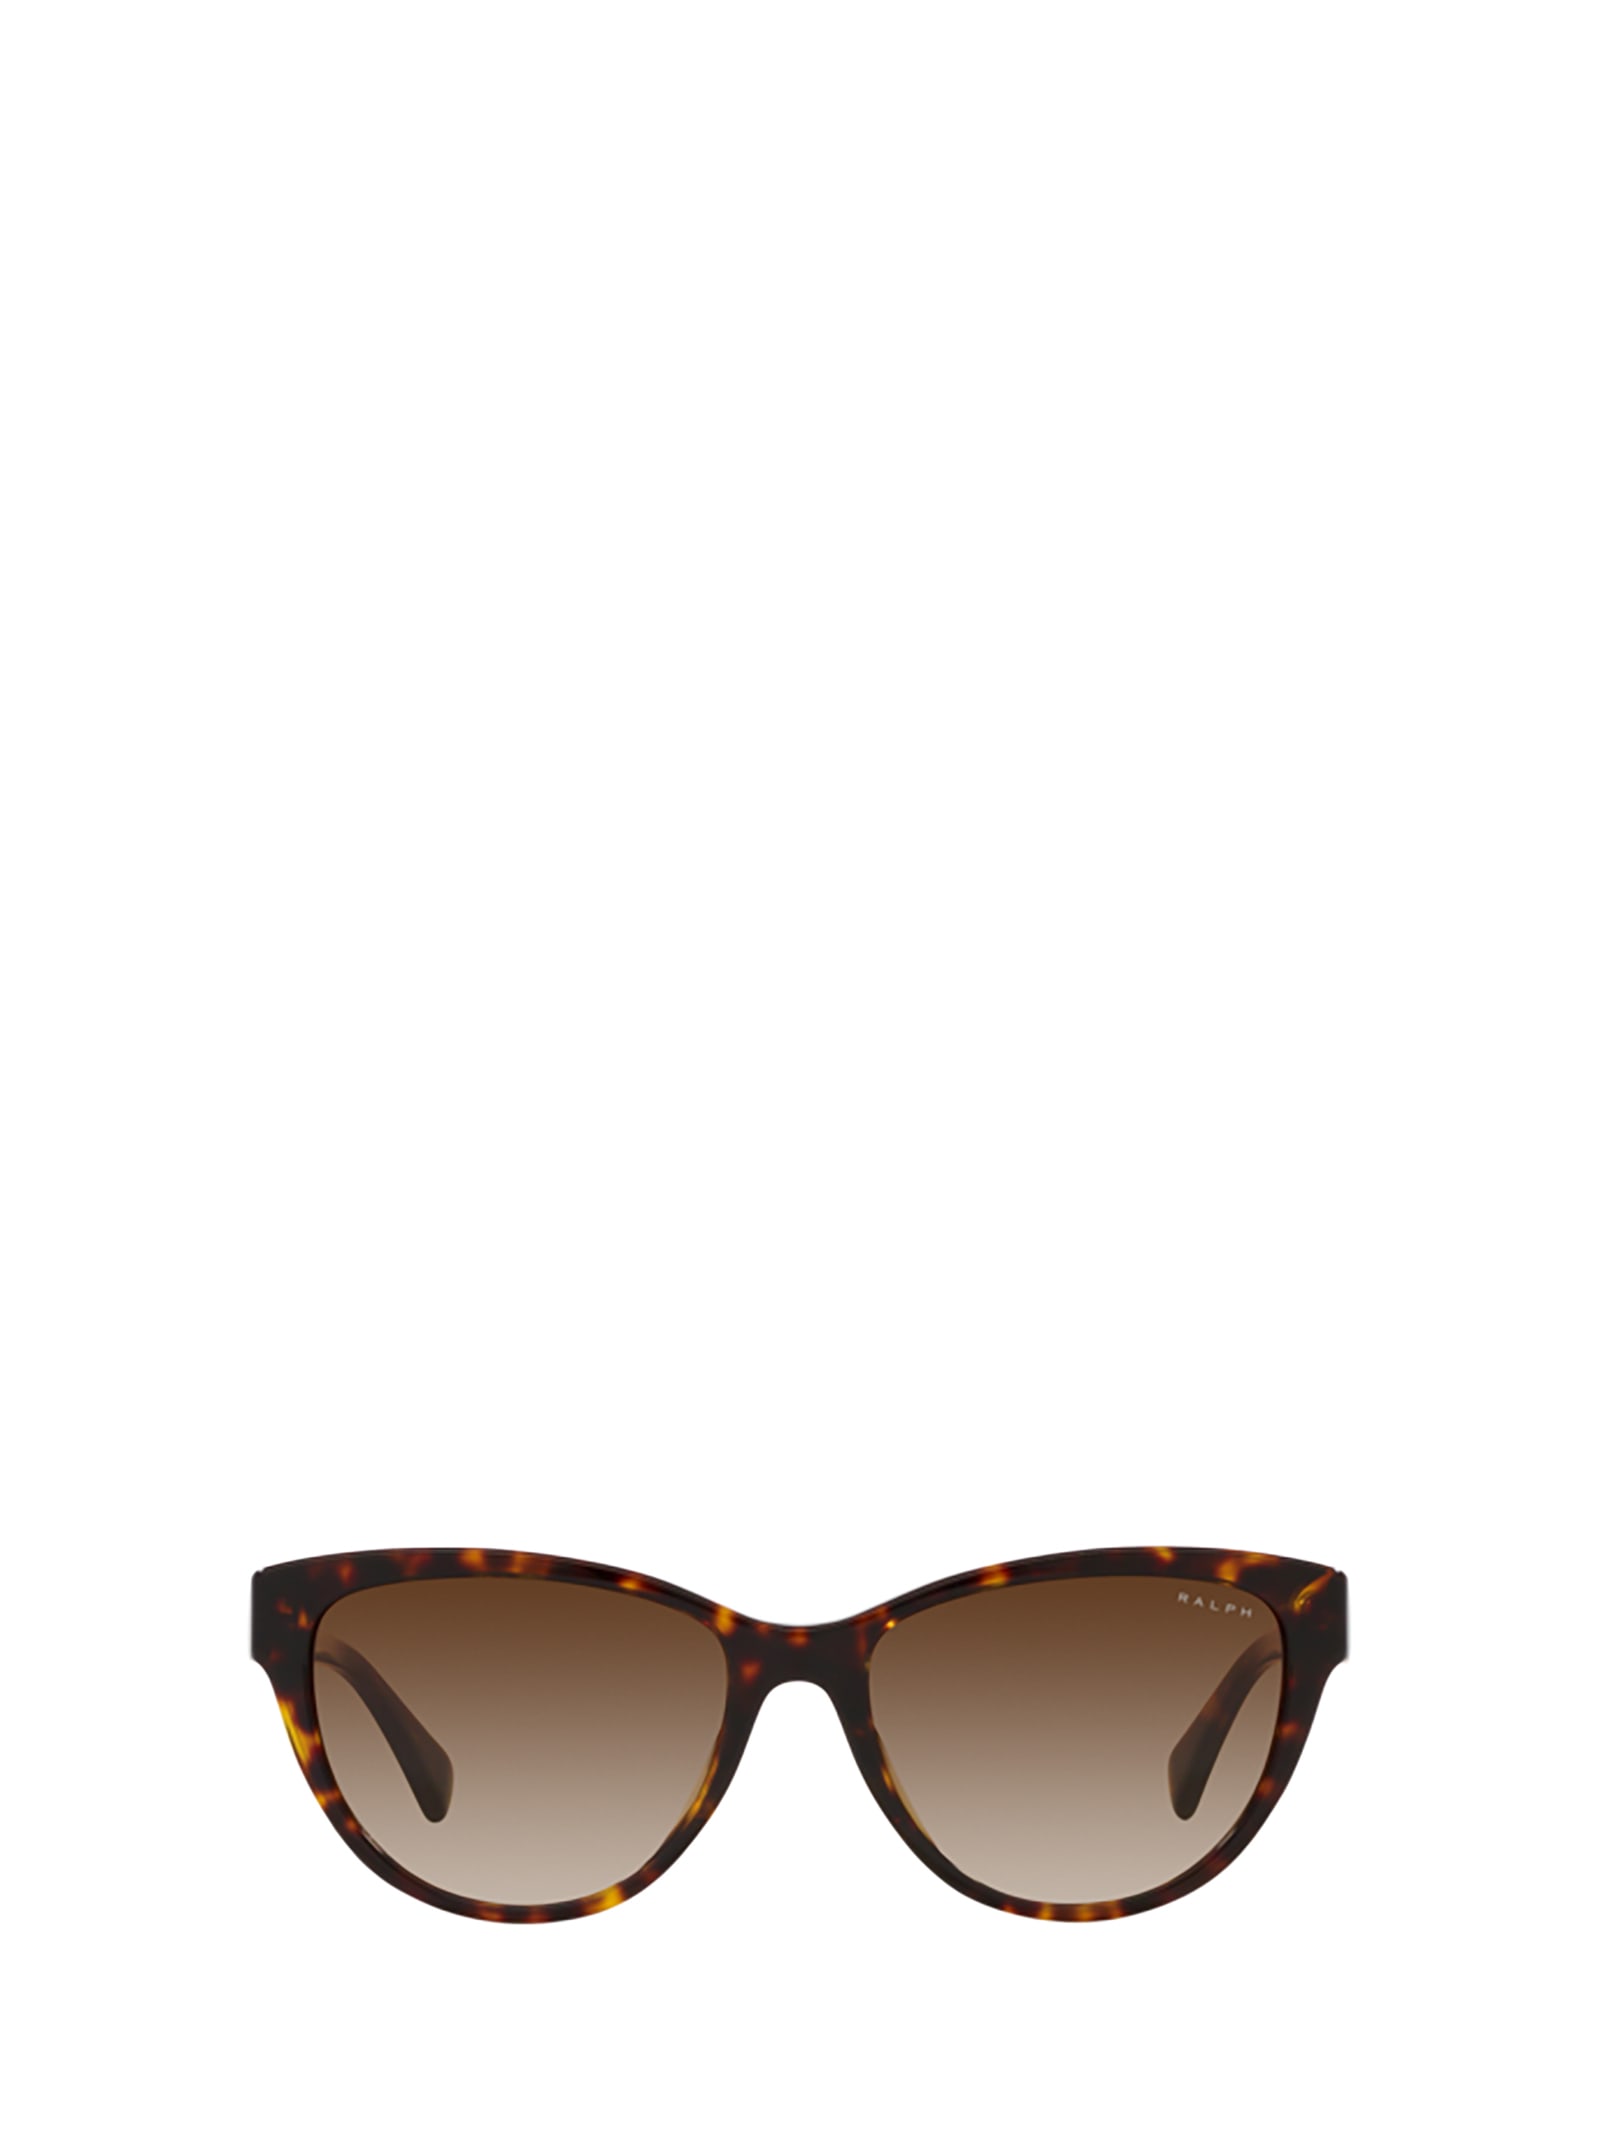 Polo Ralph Lauren Ra5299u Shiny Dark Havana Sunglasses